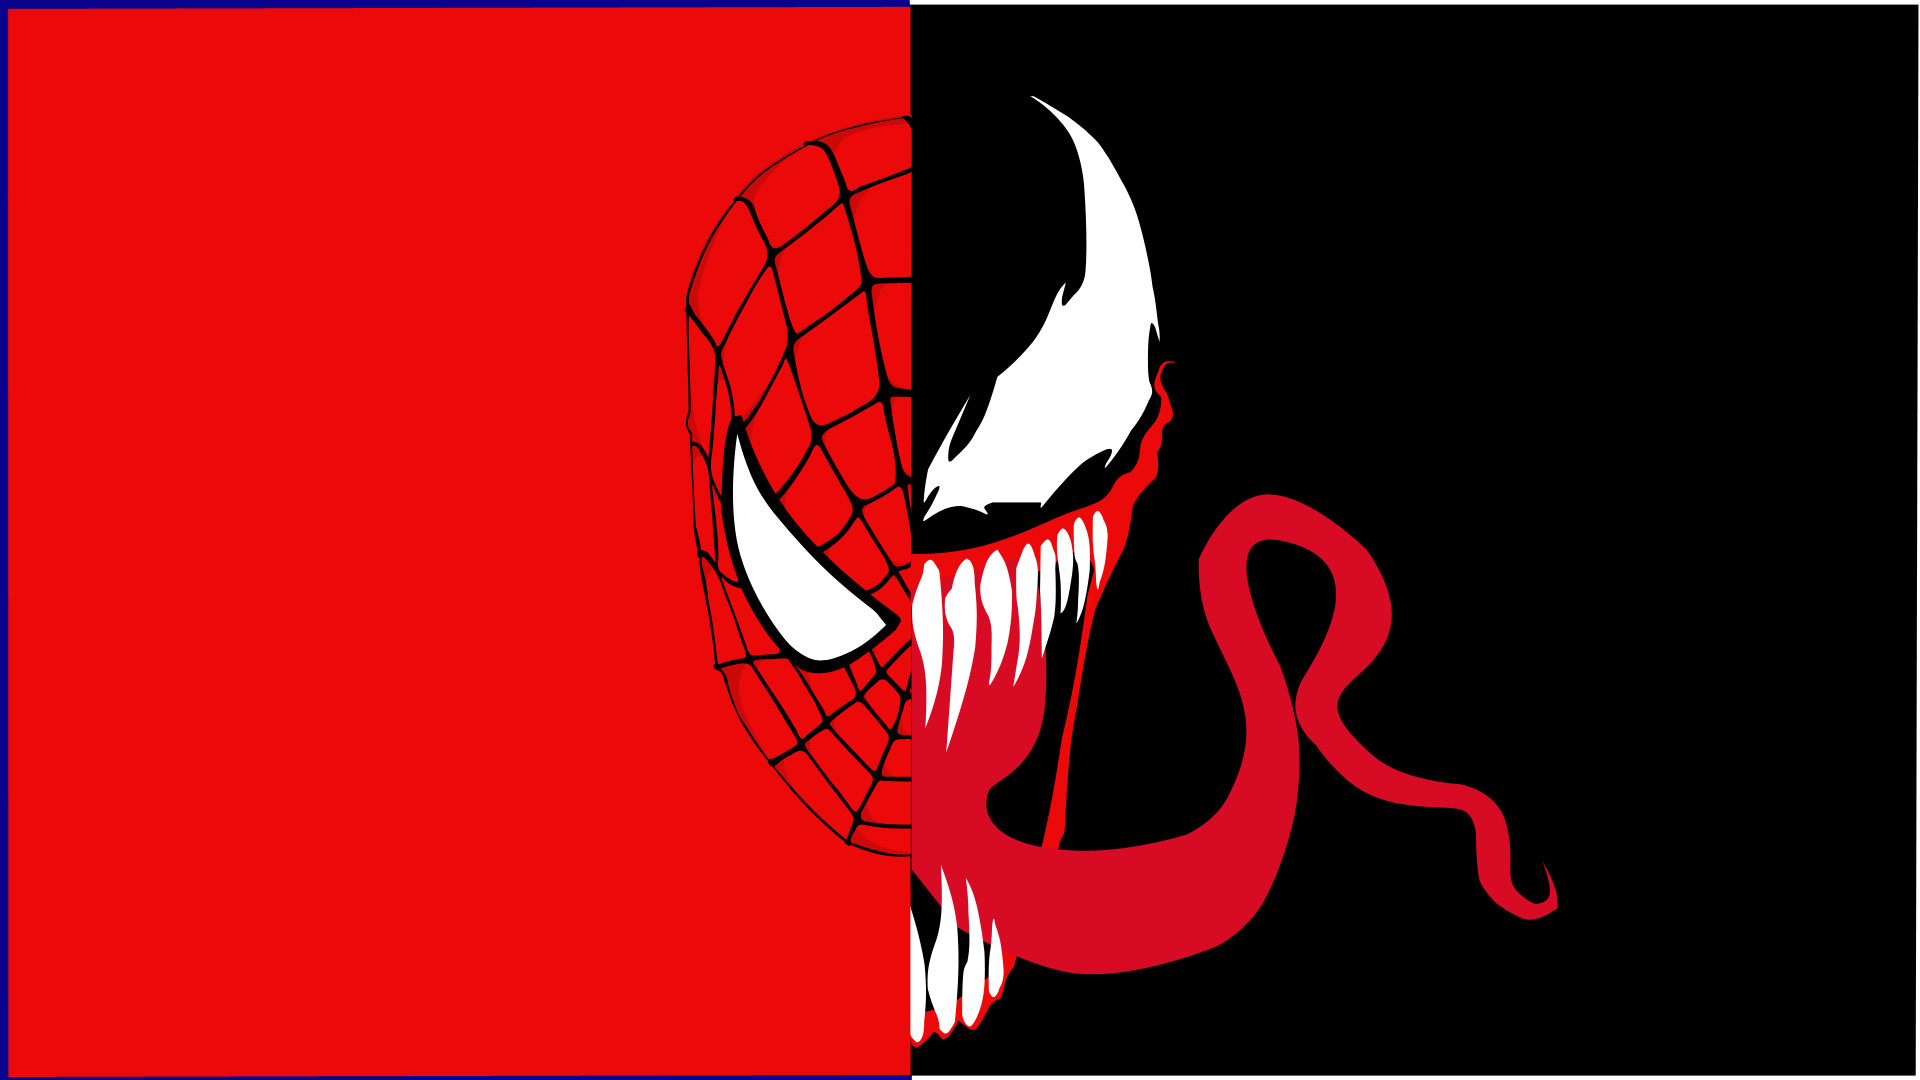 Spiderman logo wallpaper hd – photo#22